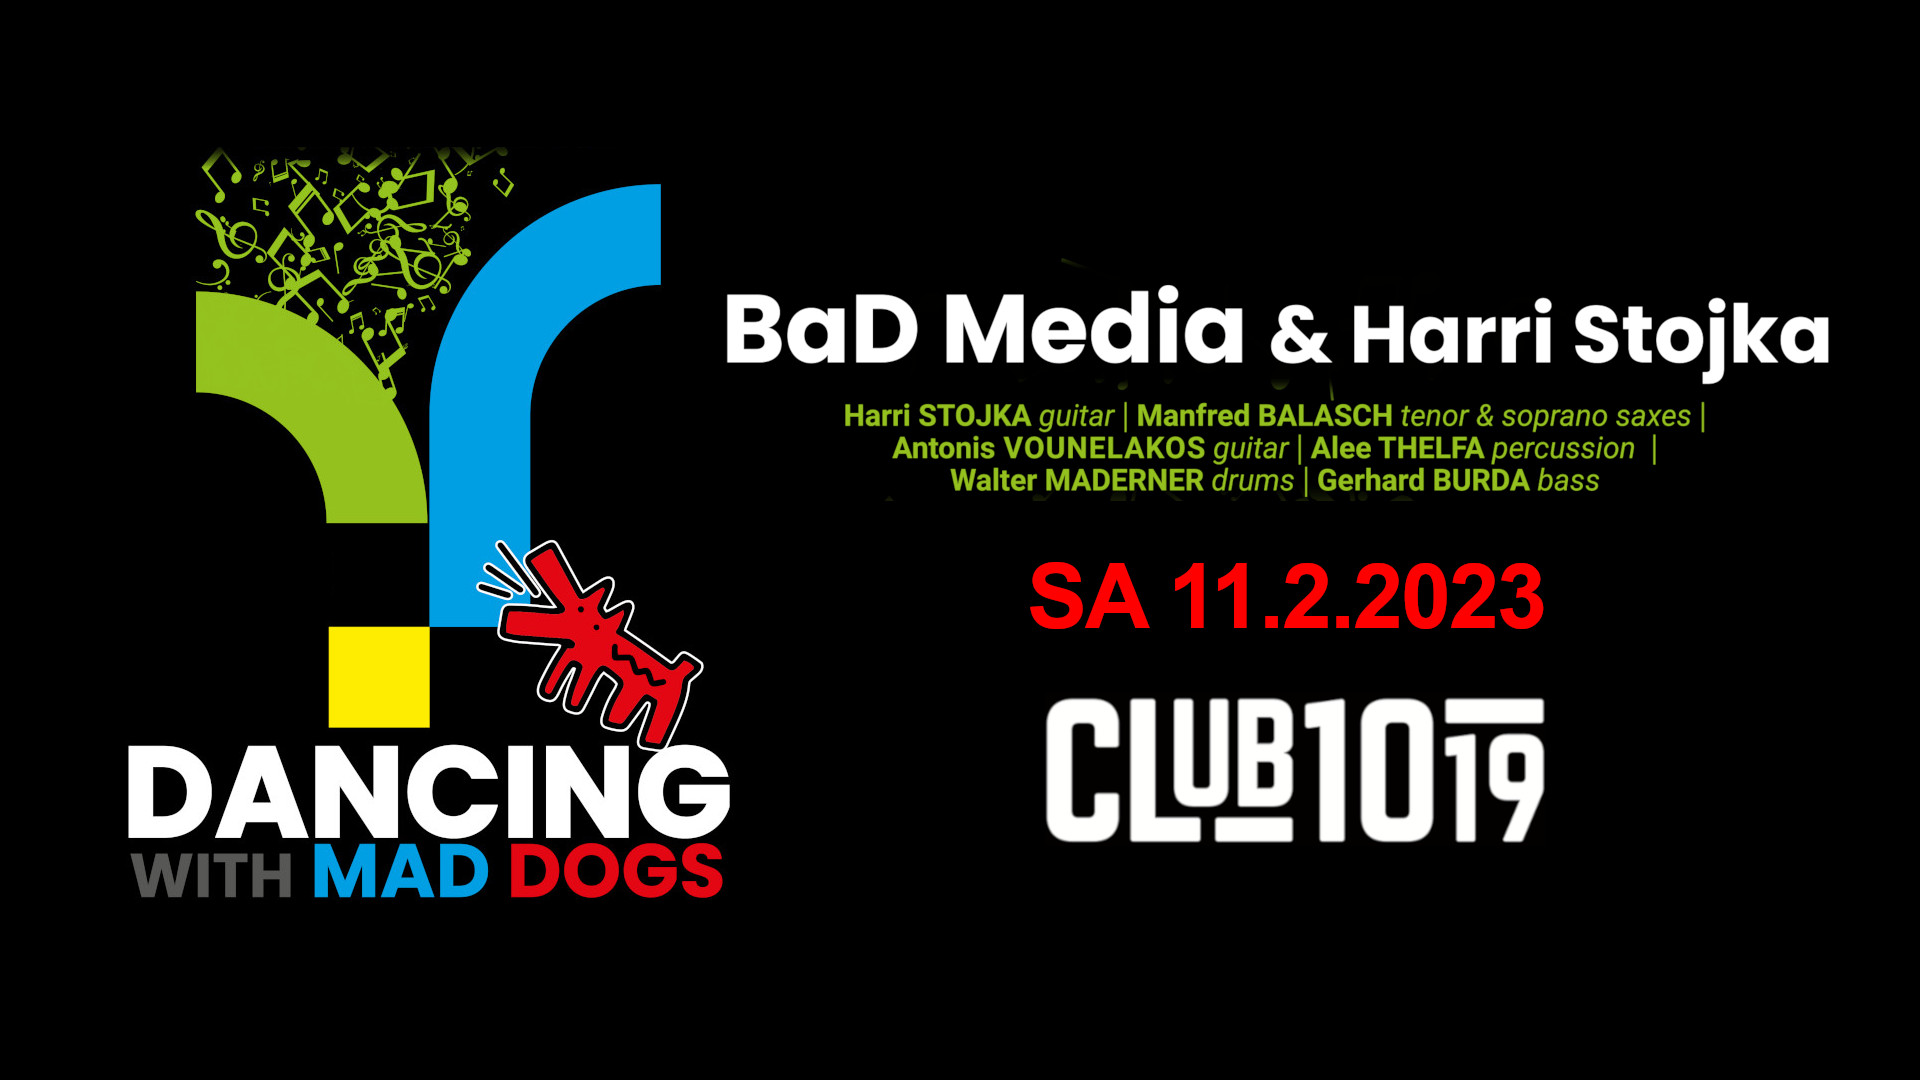 BaD Media & Harri Stojka am 11. February 2023 @ 1019 Jazzclub.